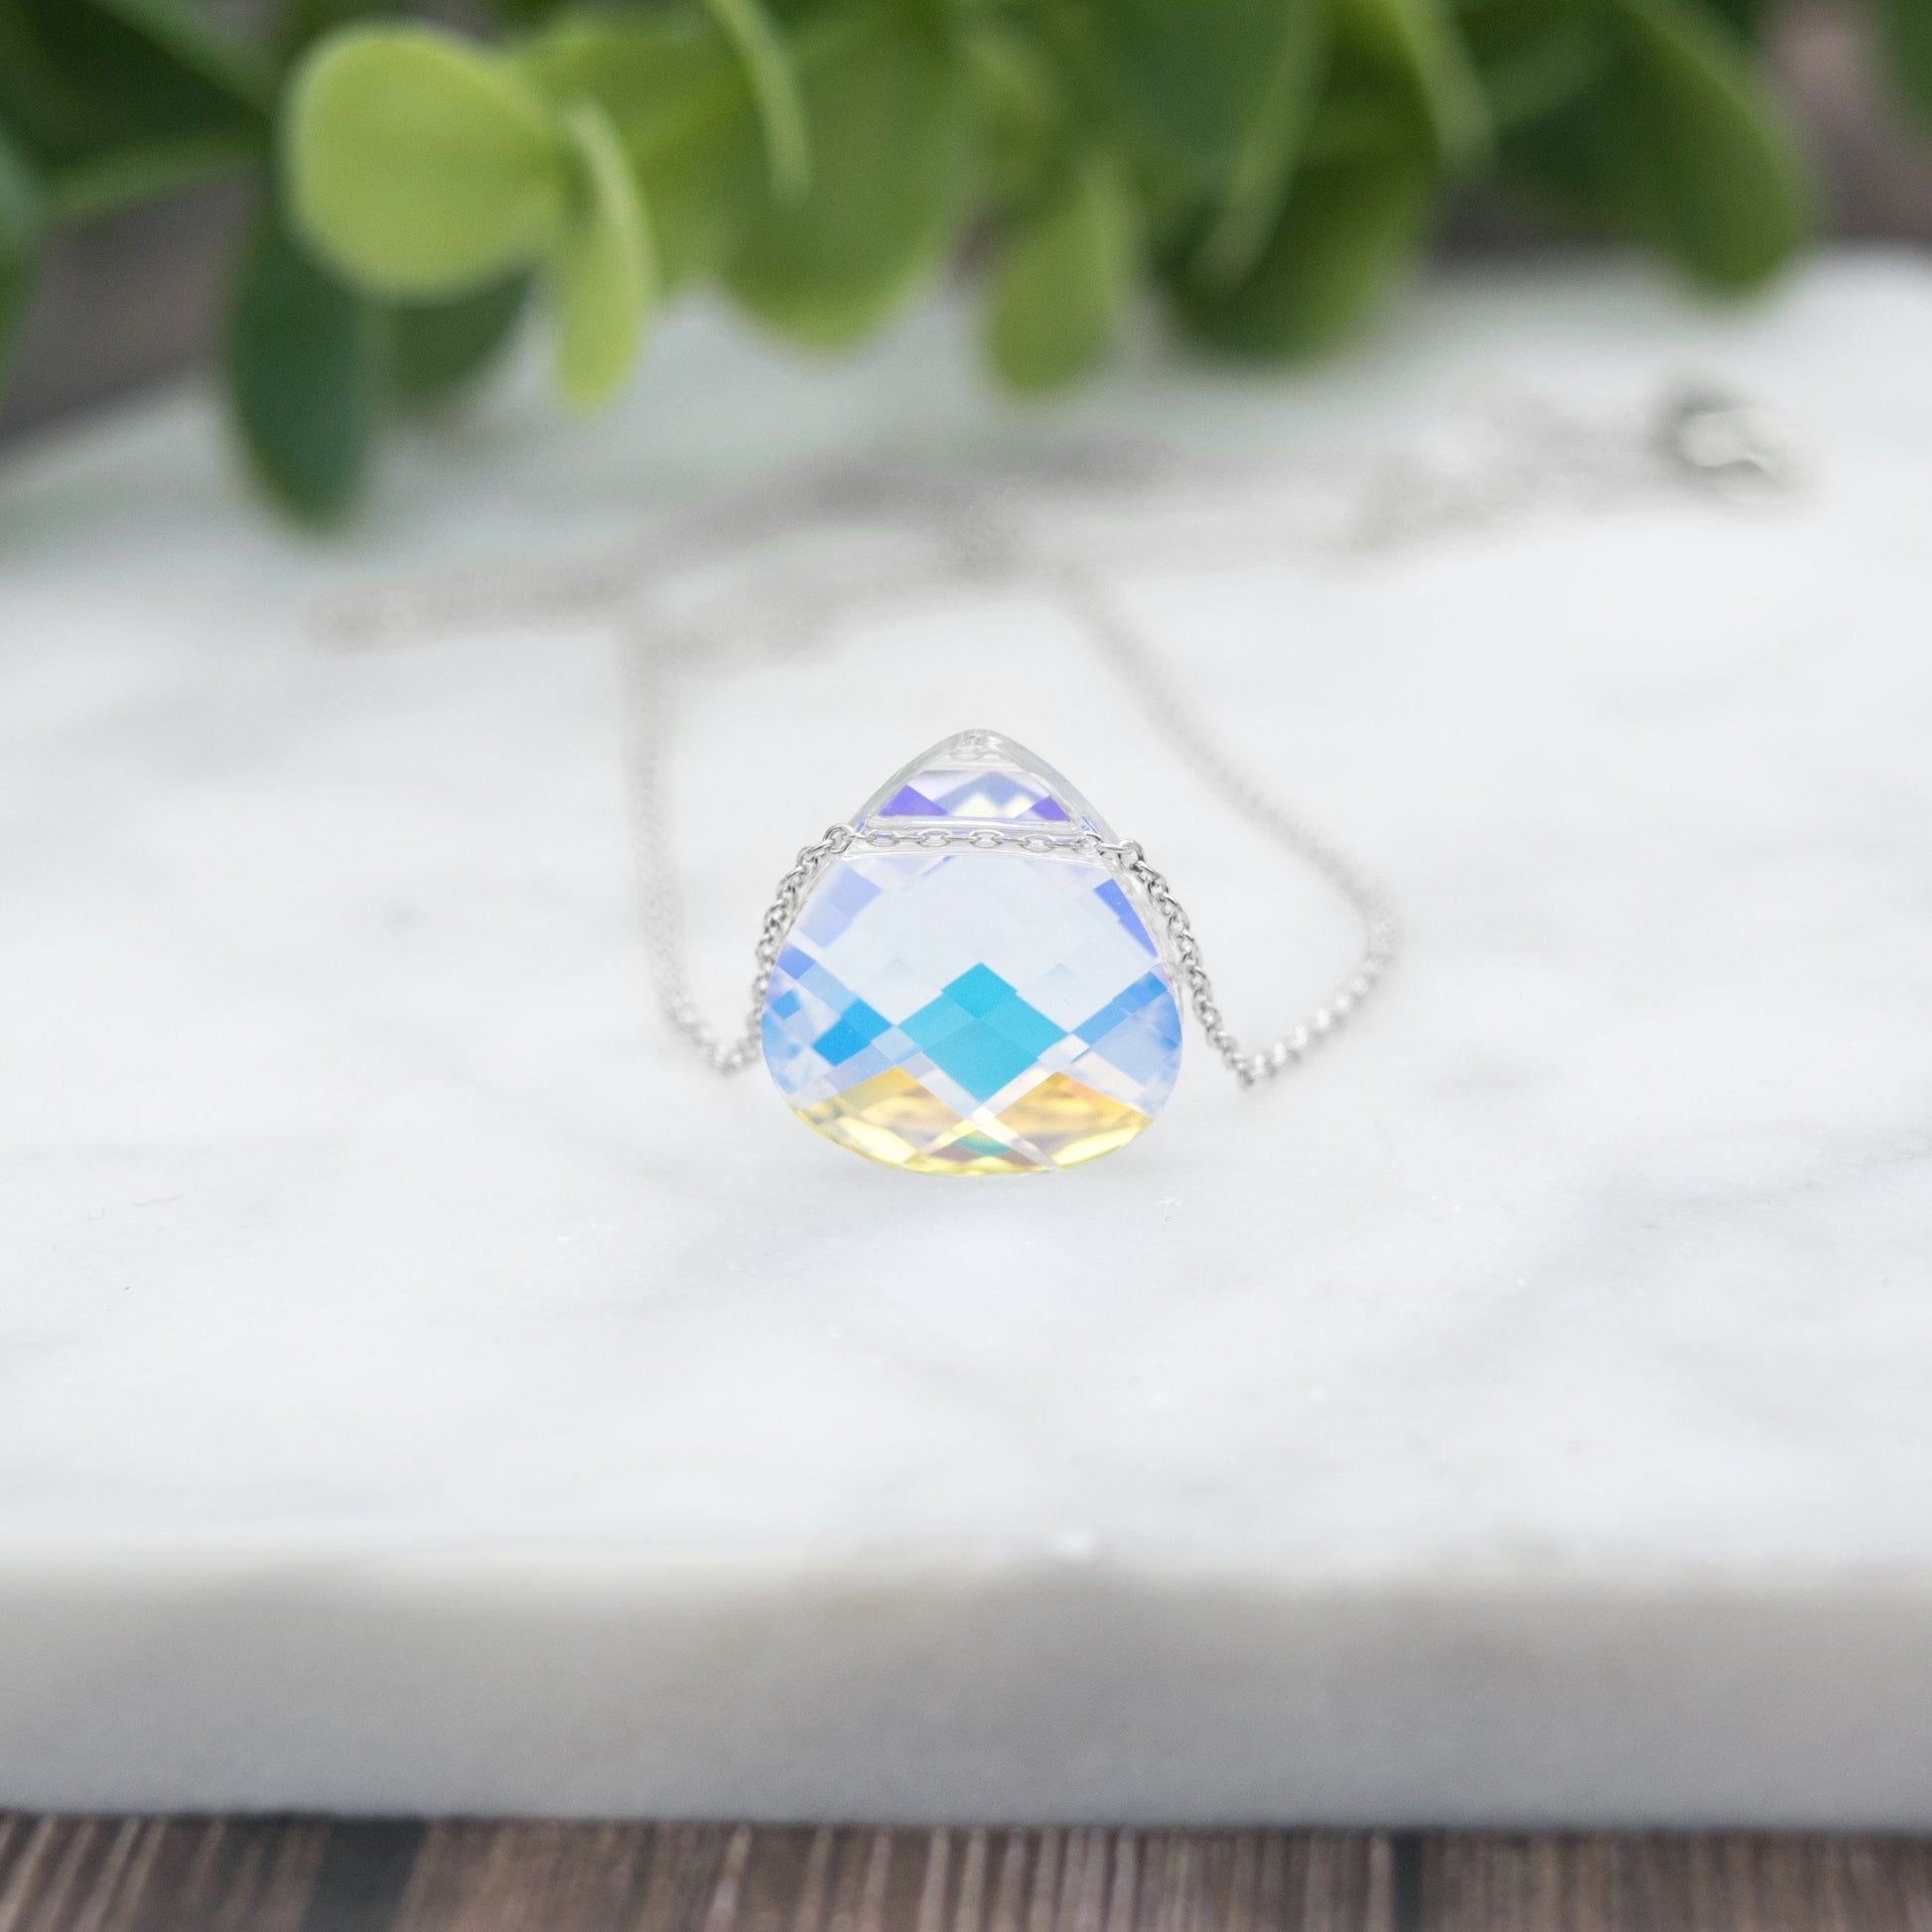 Ashley Swarovski rainbow crystal pendant necklace in sterling silver